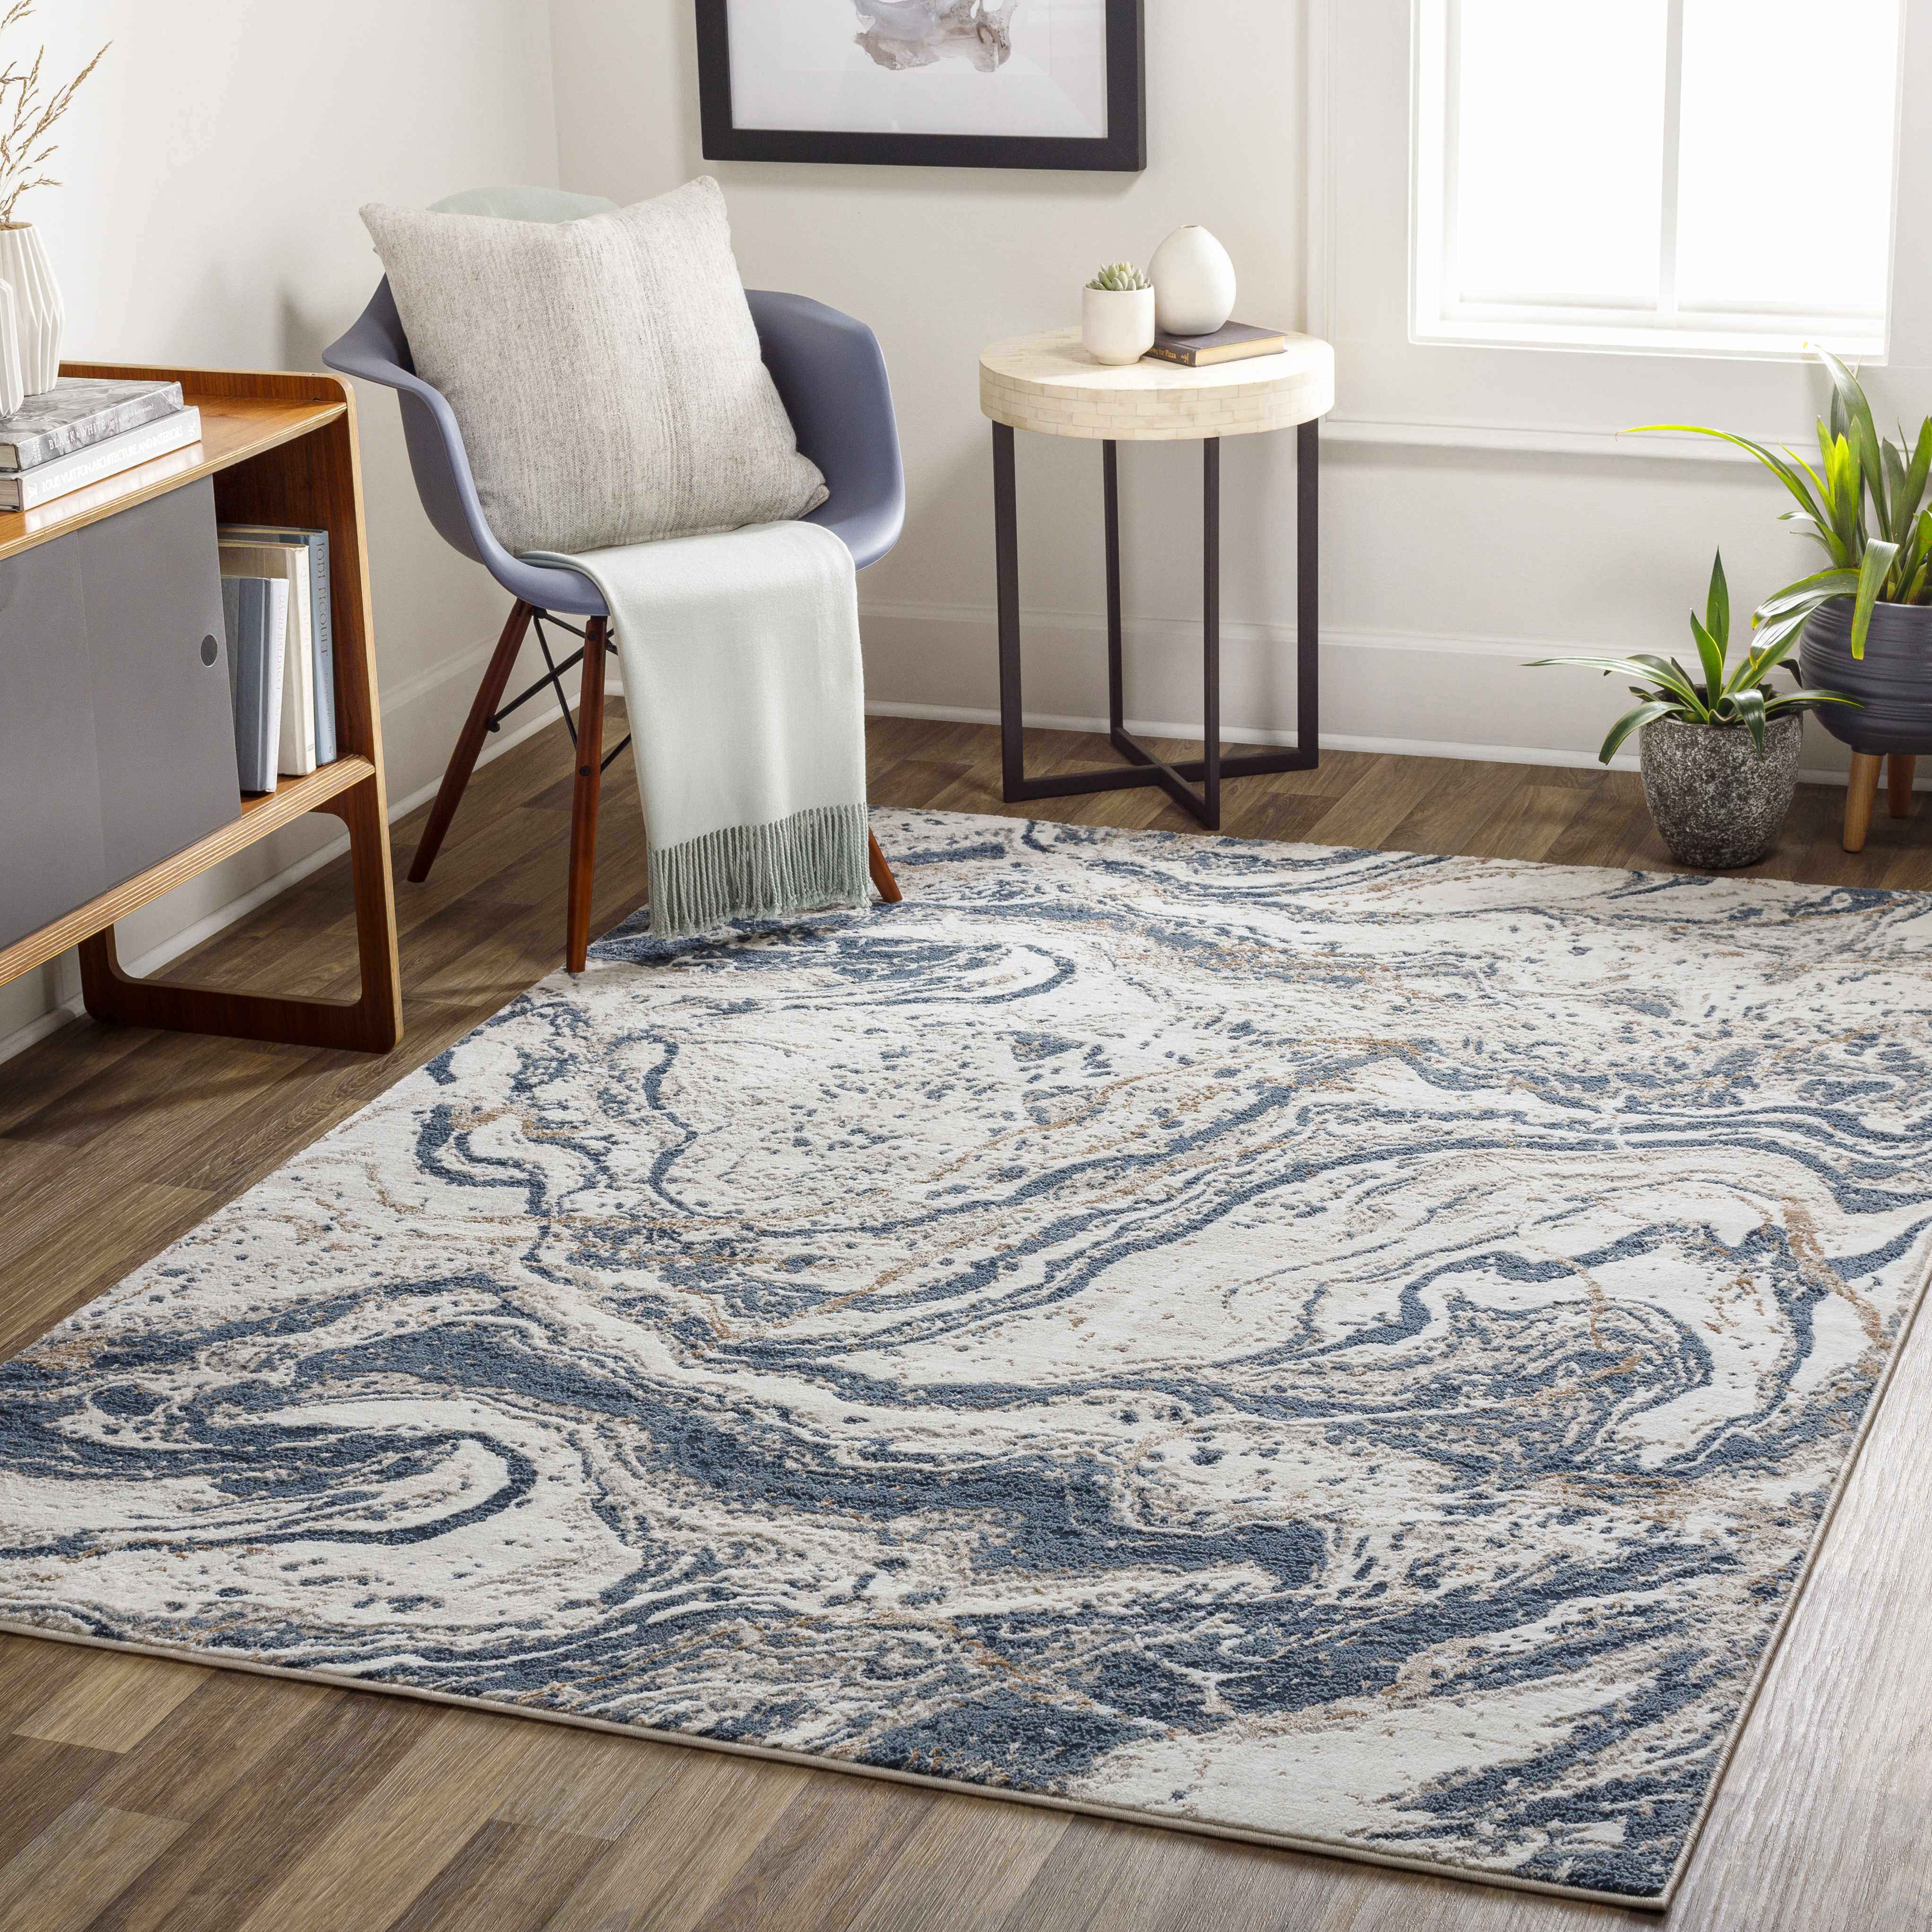 louis vuitton Living room carpet rugs